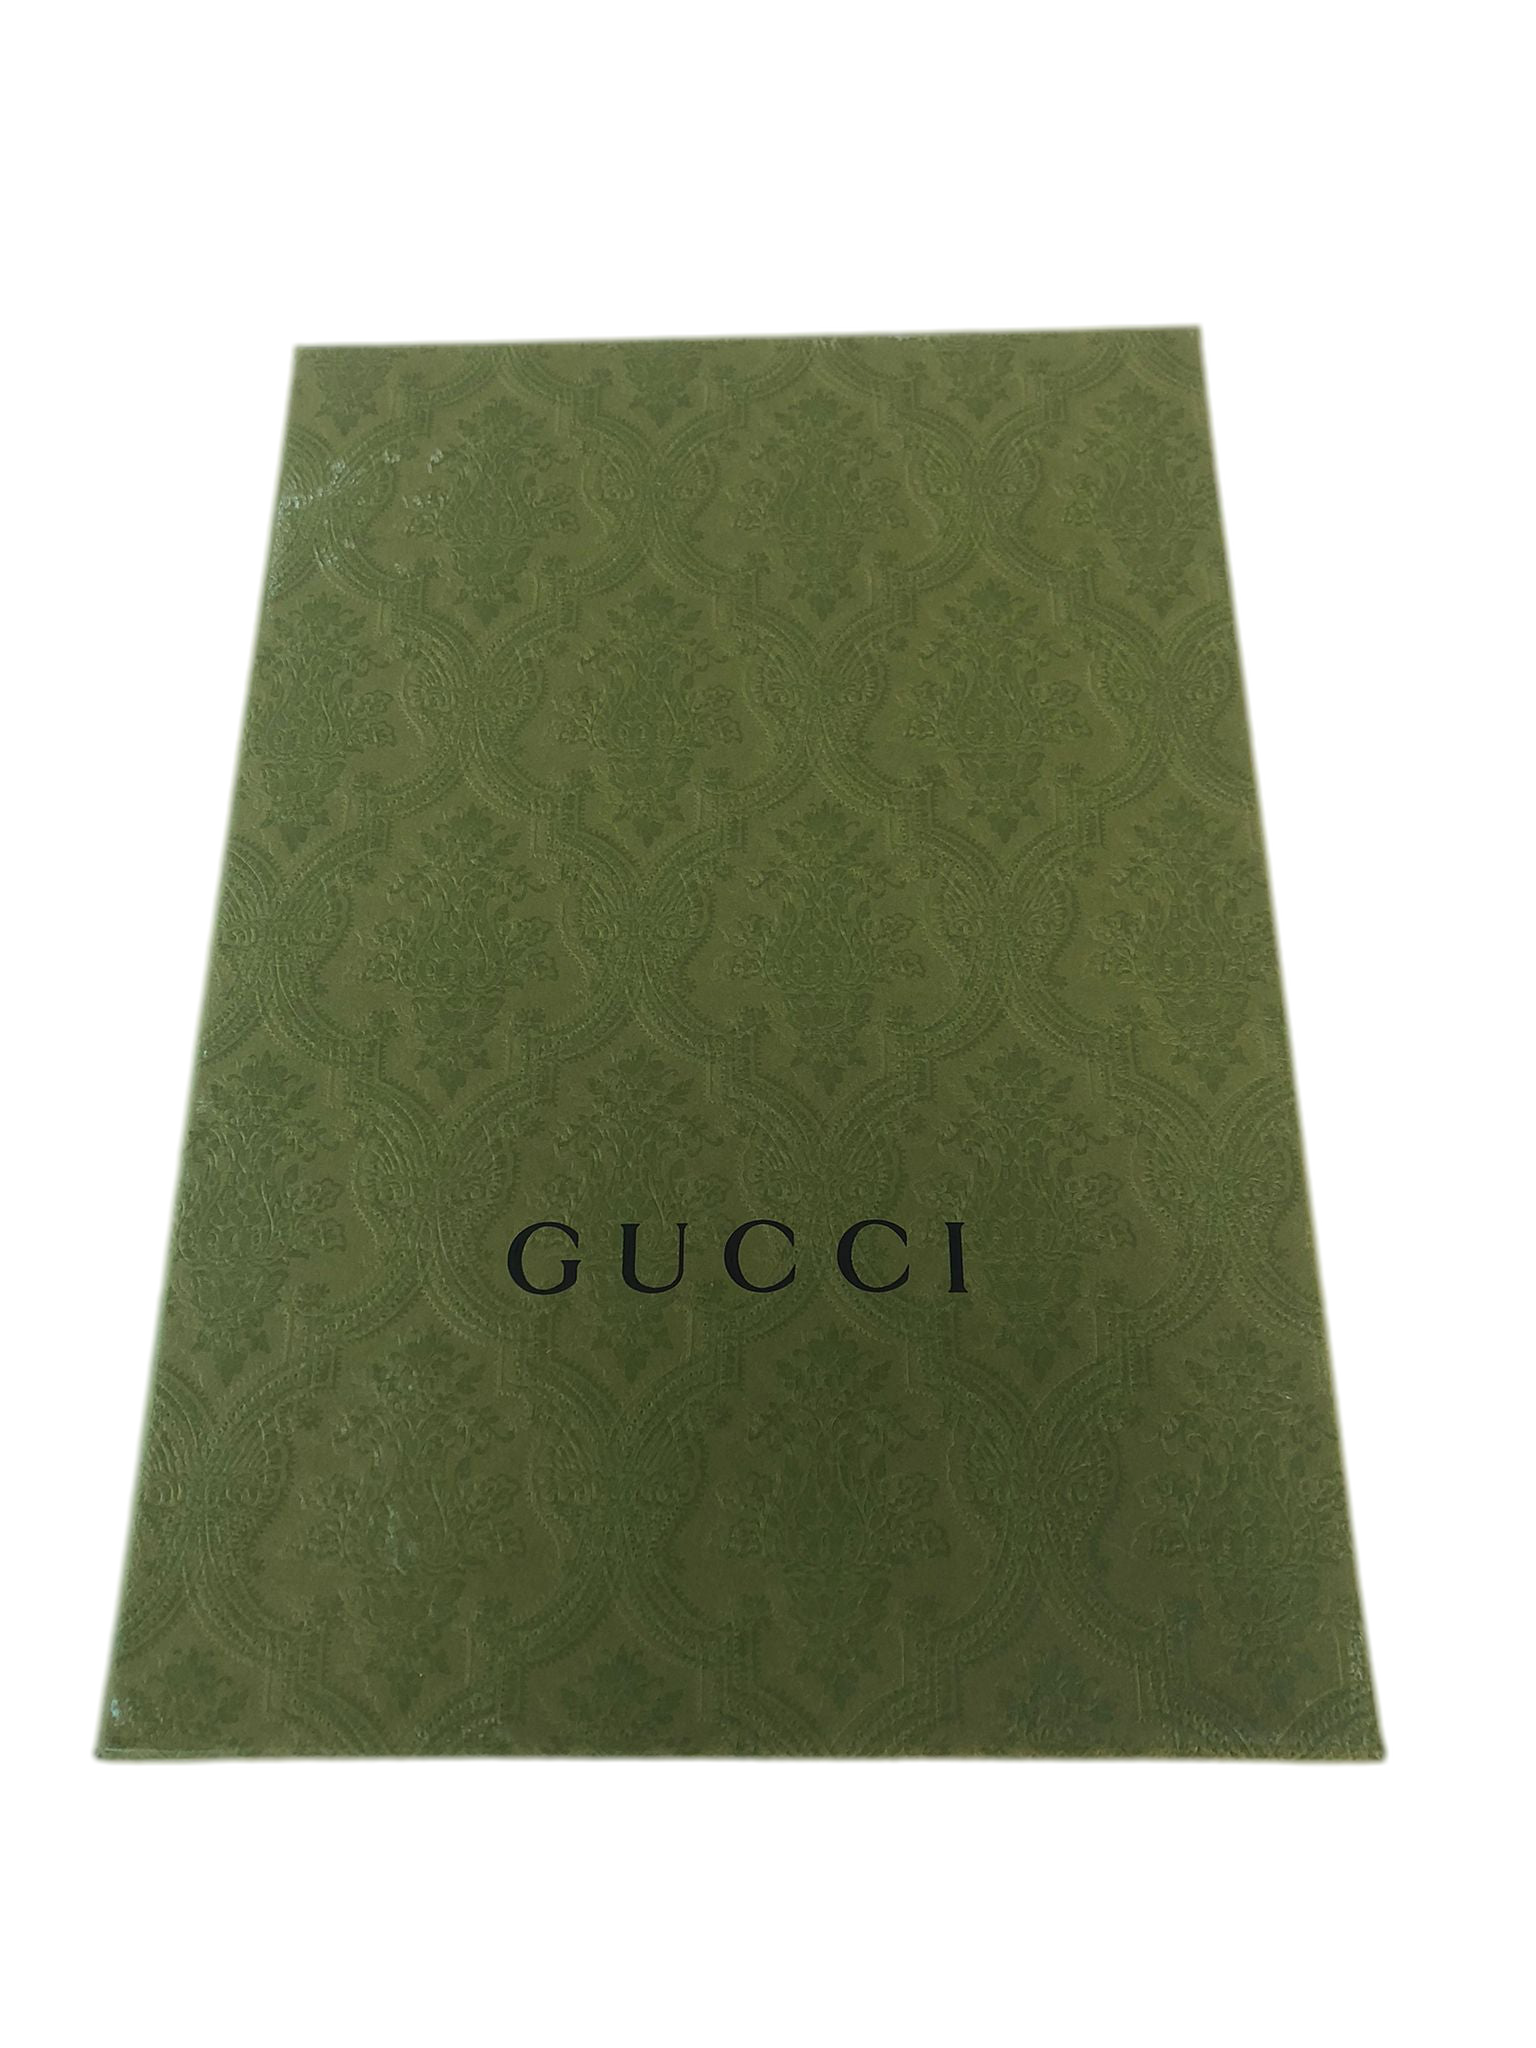 Various Gucci boxes